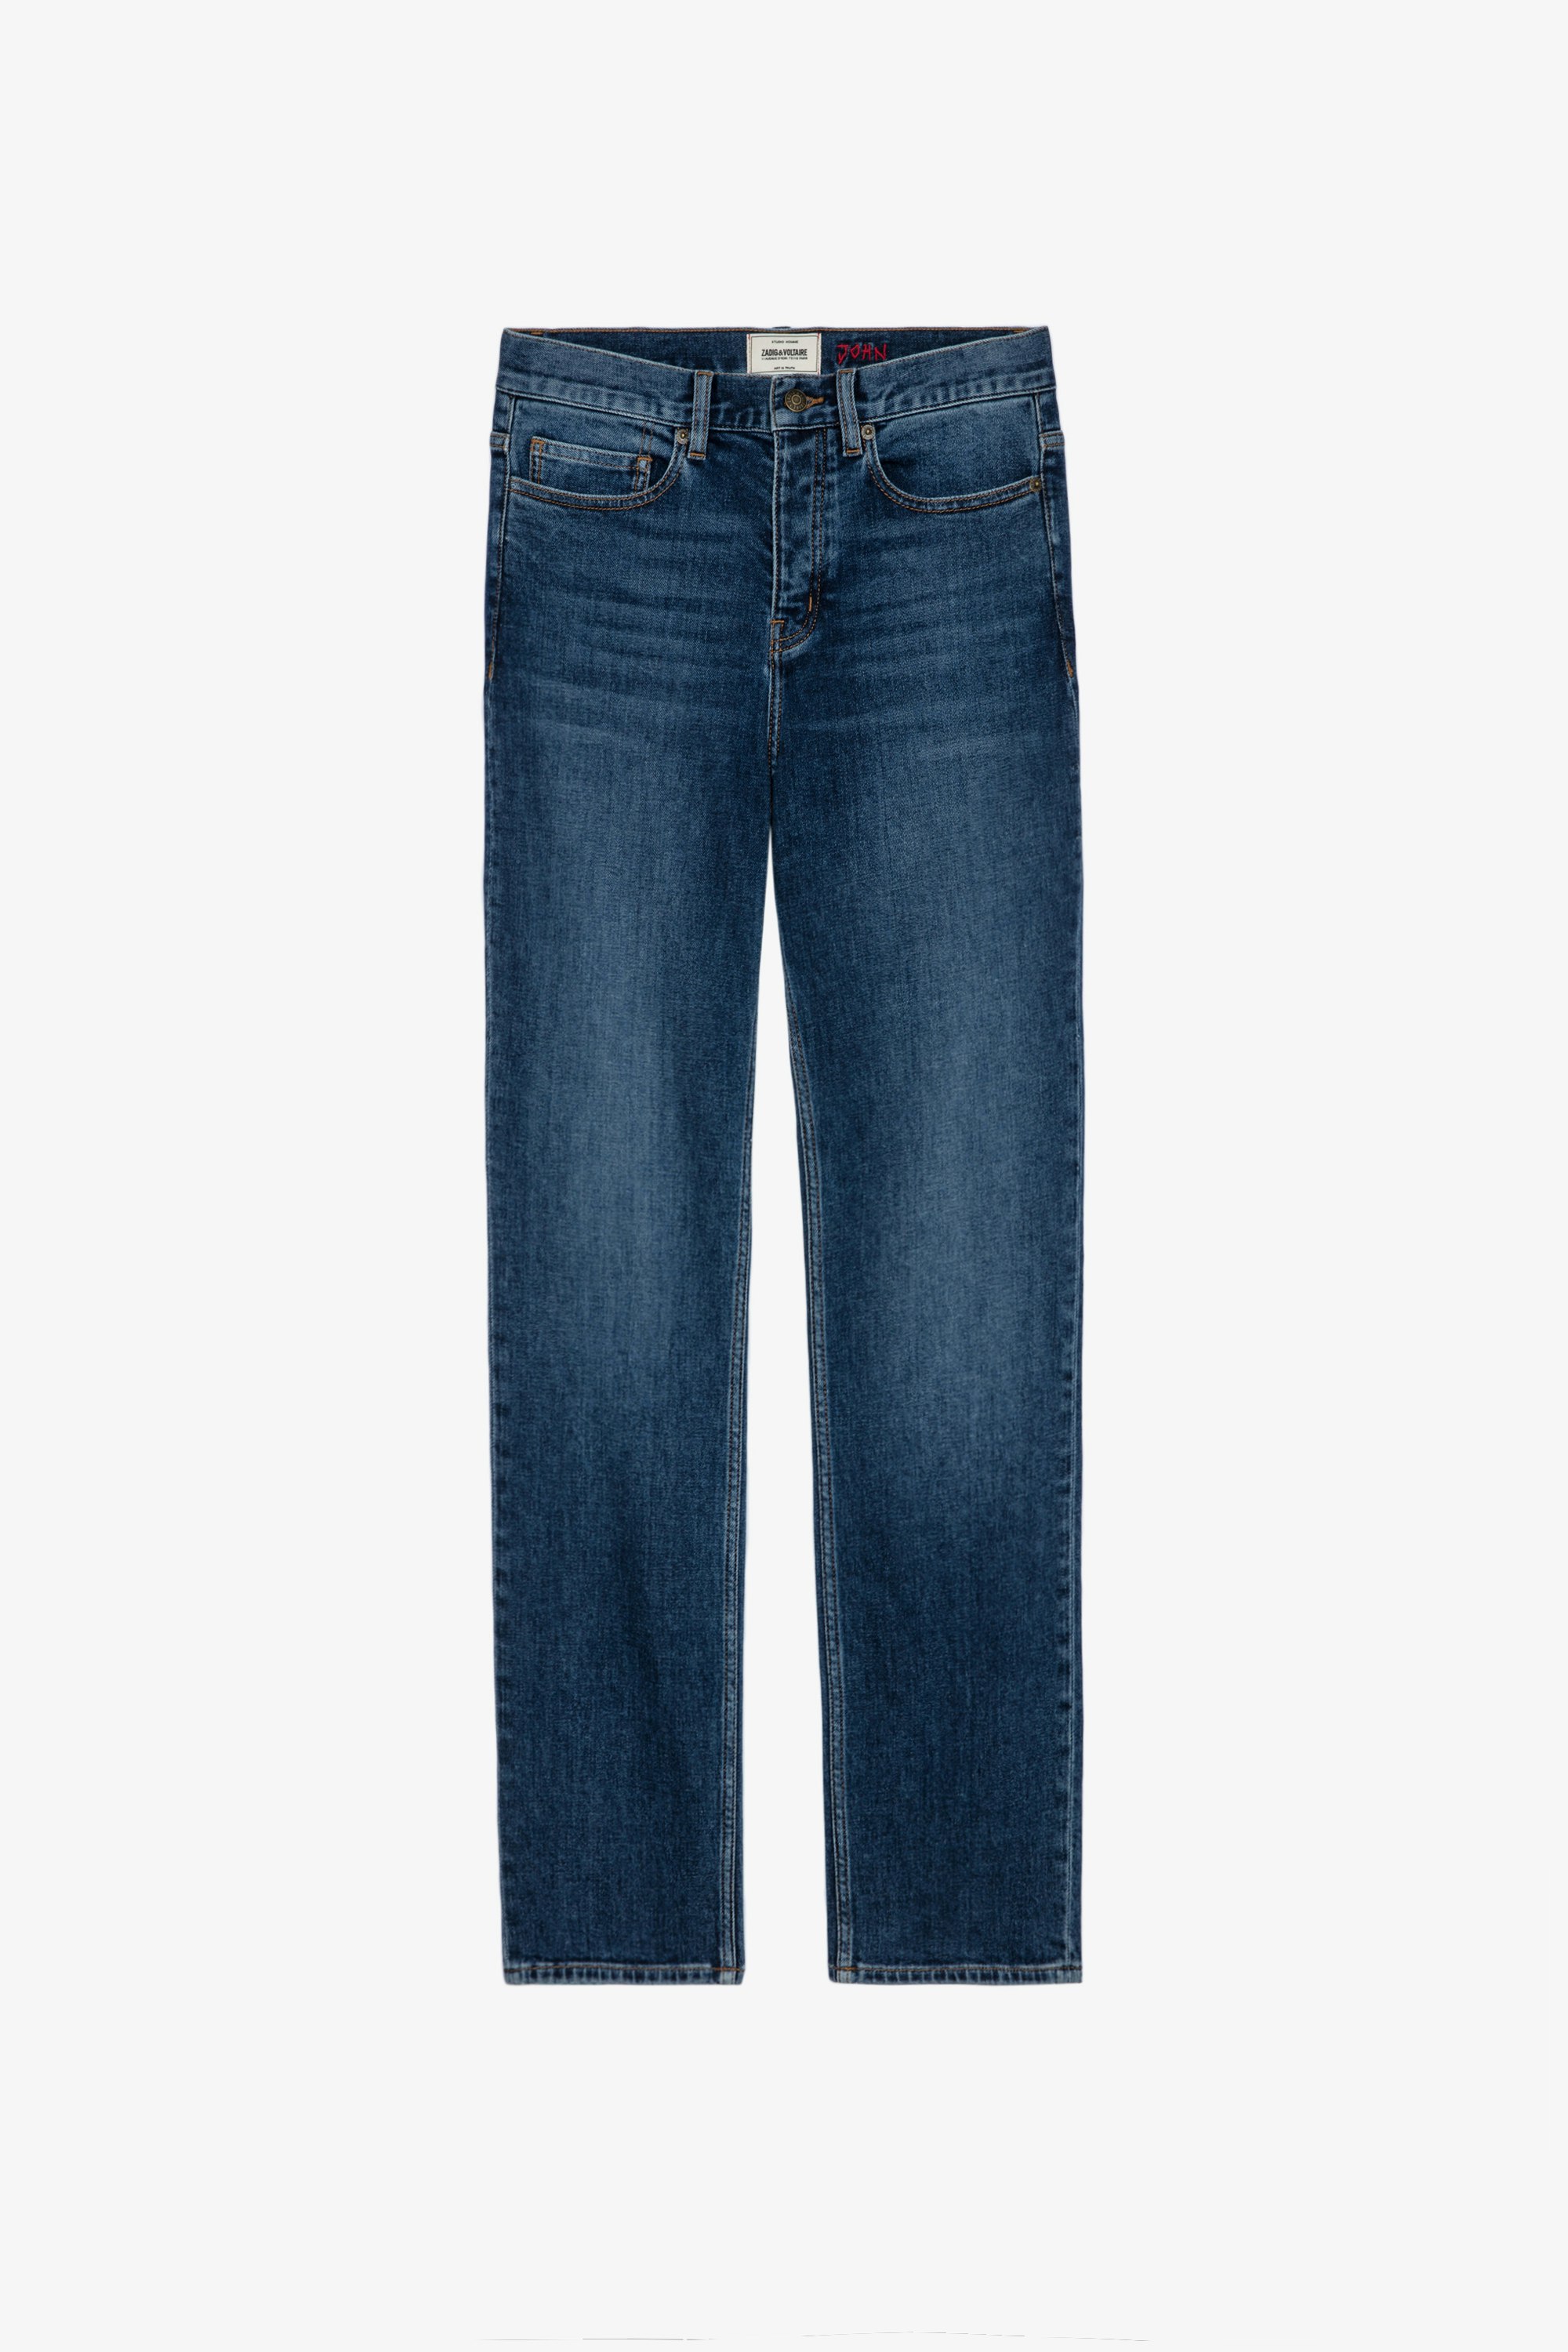 Jean John Men’s straight-cut blue denim jeans